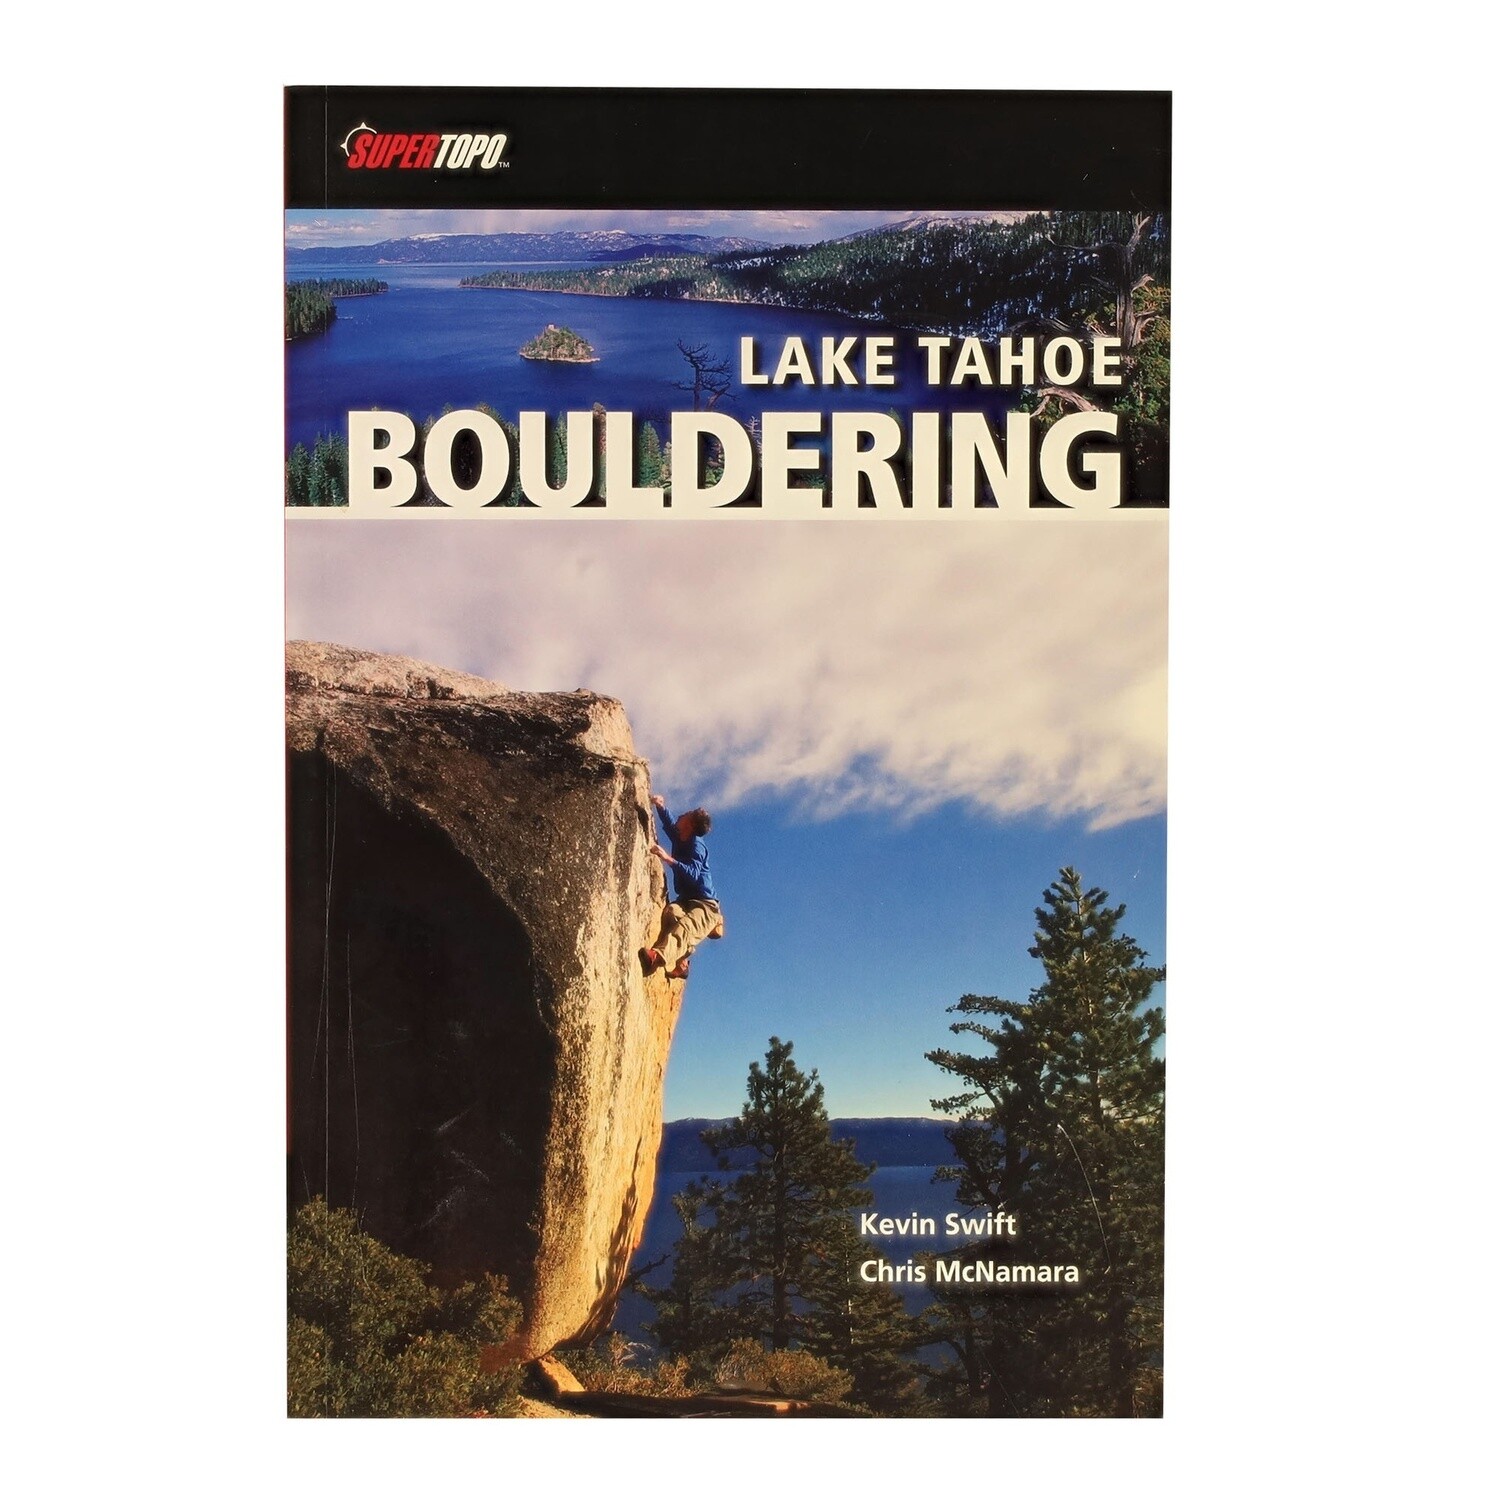 Lake Tahoe Bouldering By Kevin Swift and Chris McNamara